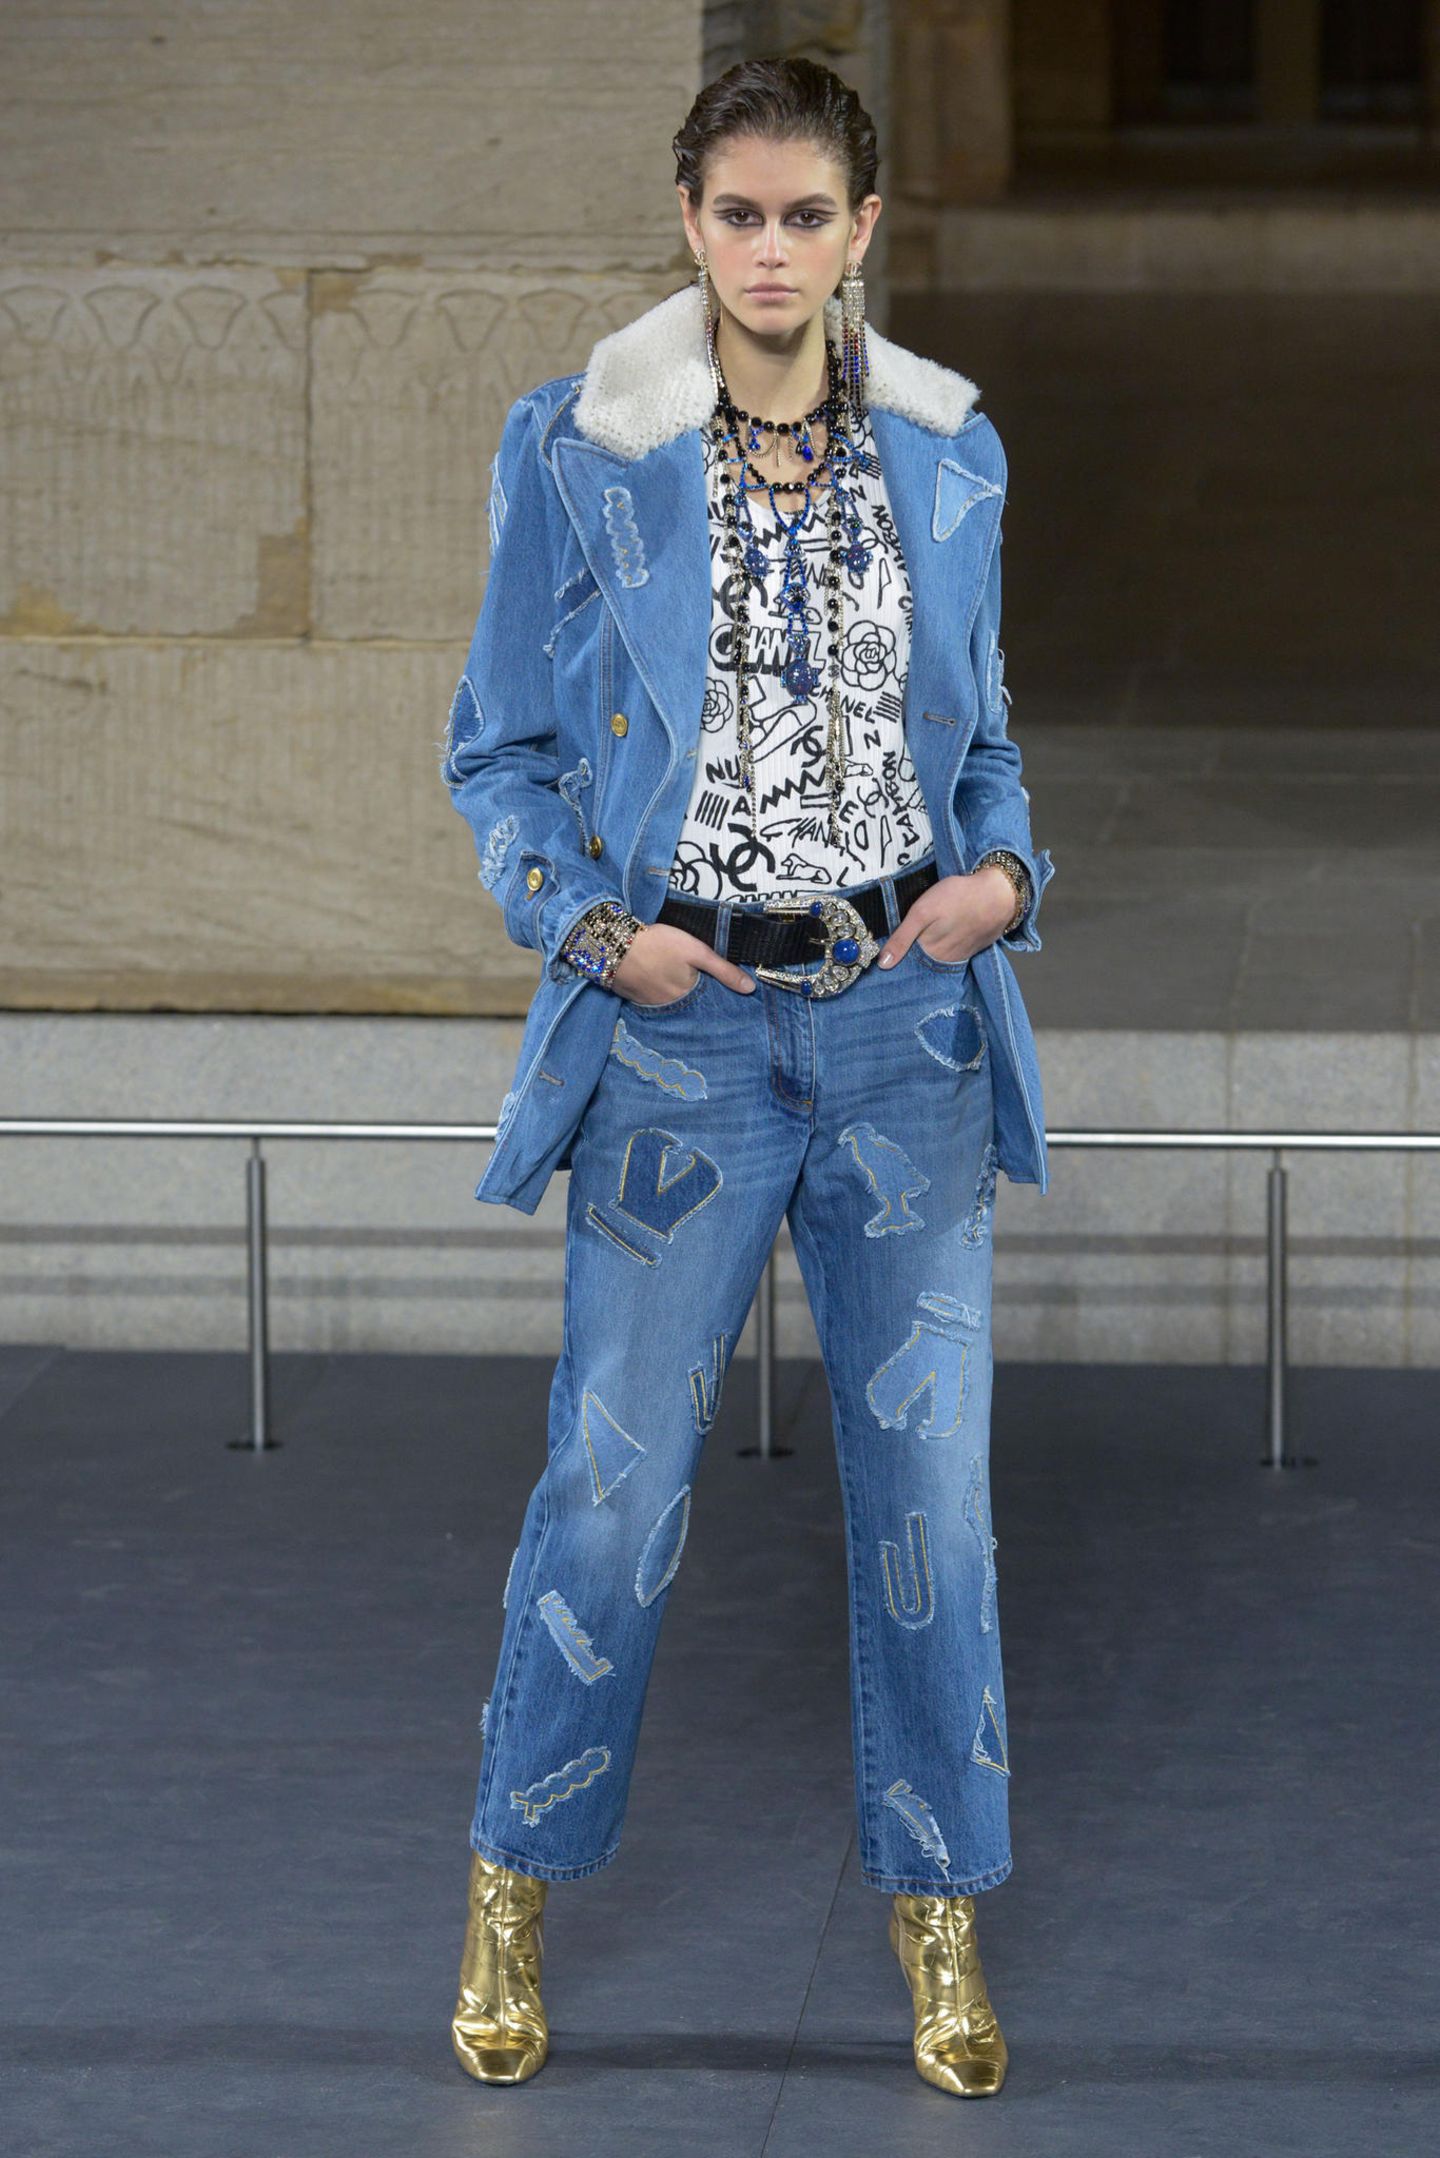 Jeans-Trends: Kaia Gerber